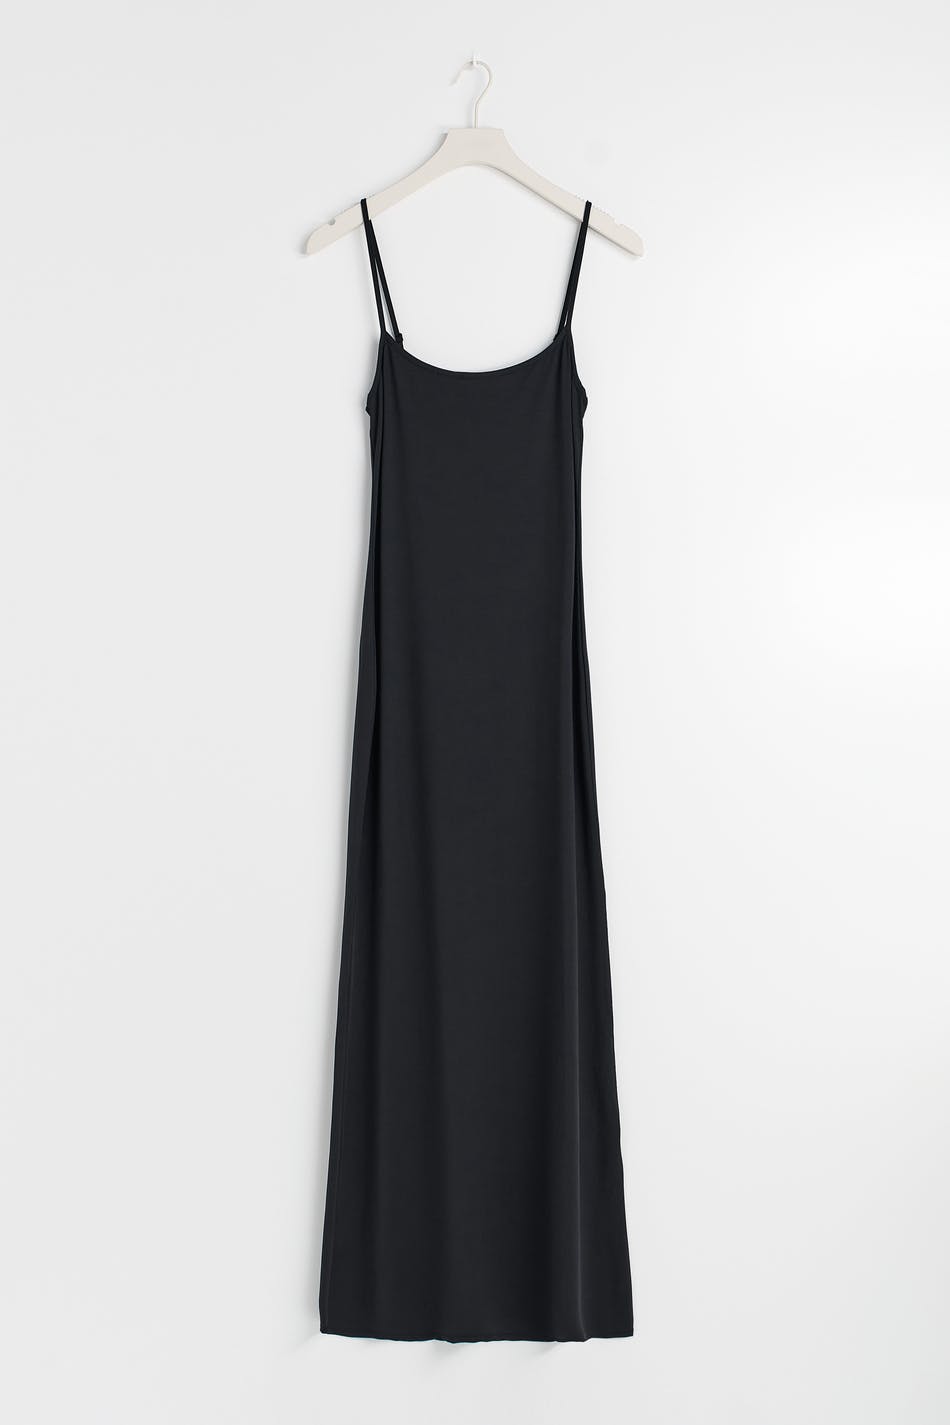  Gina Tricot- Tall maxi slip dress - lange kleider- Black - XXS- Female